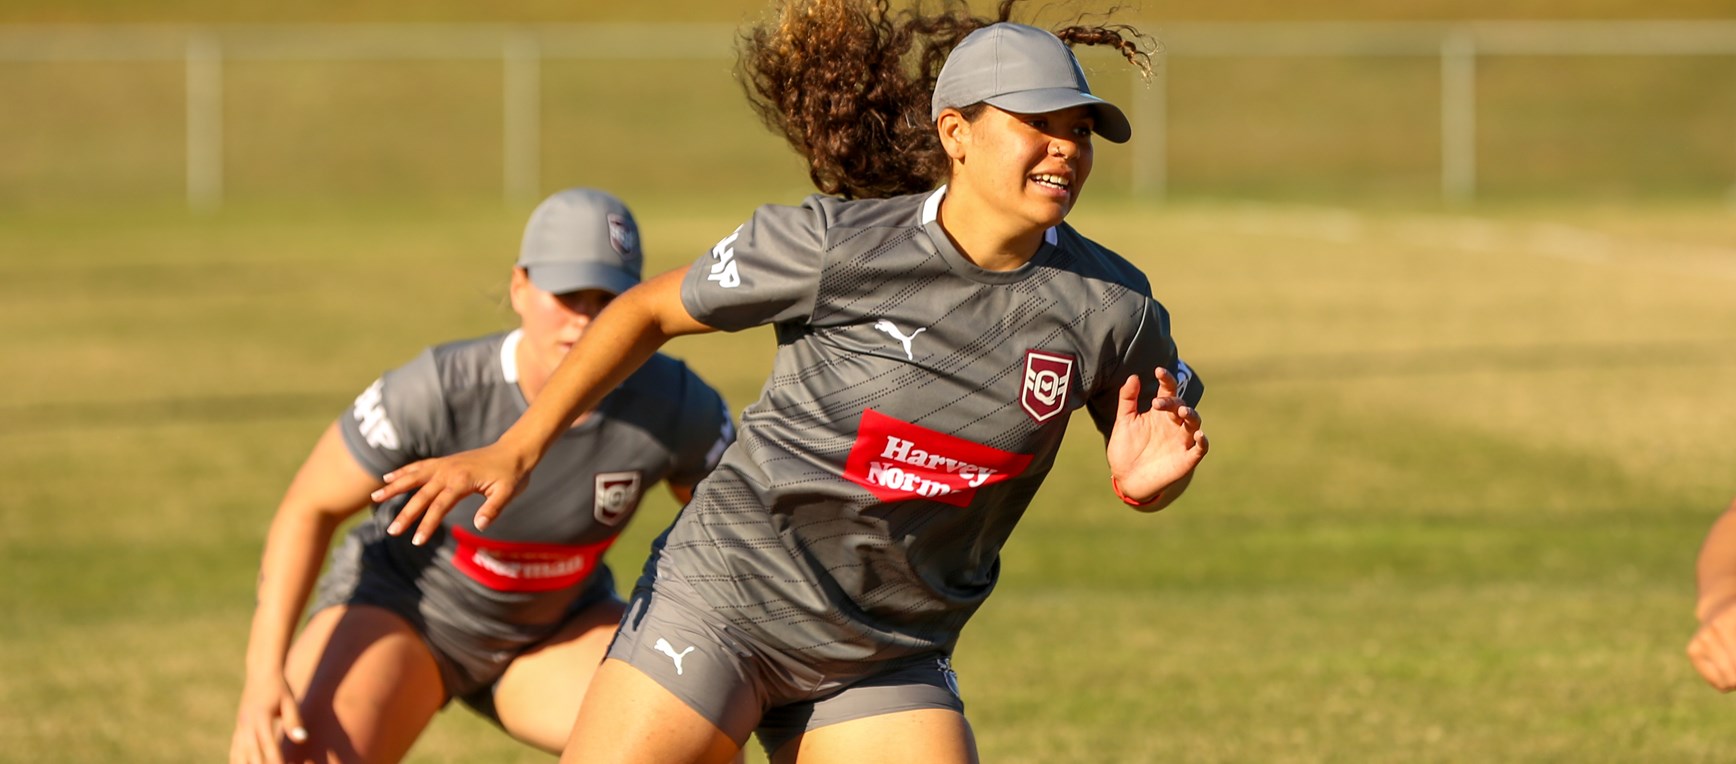 In pictures: Training under way for Queensland Under 19s